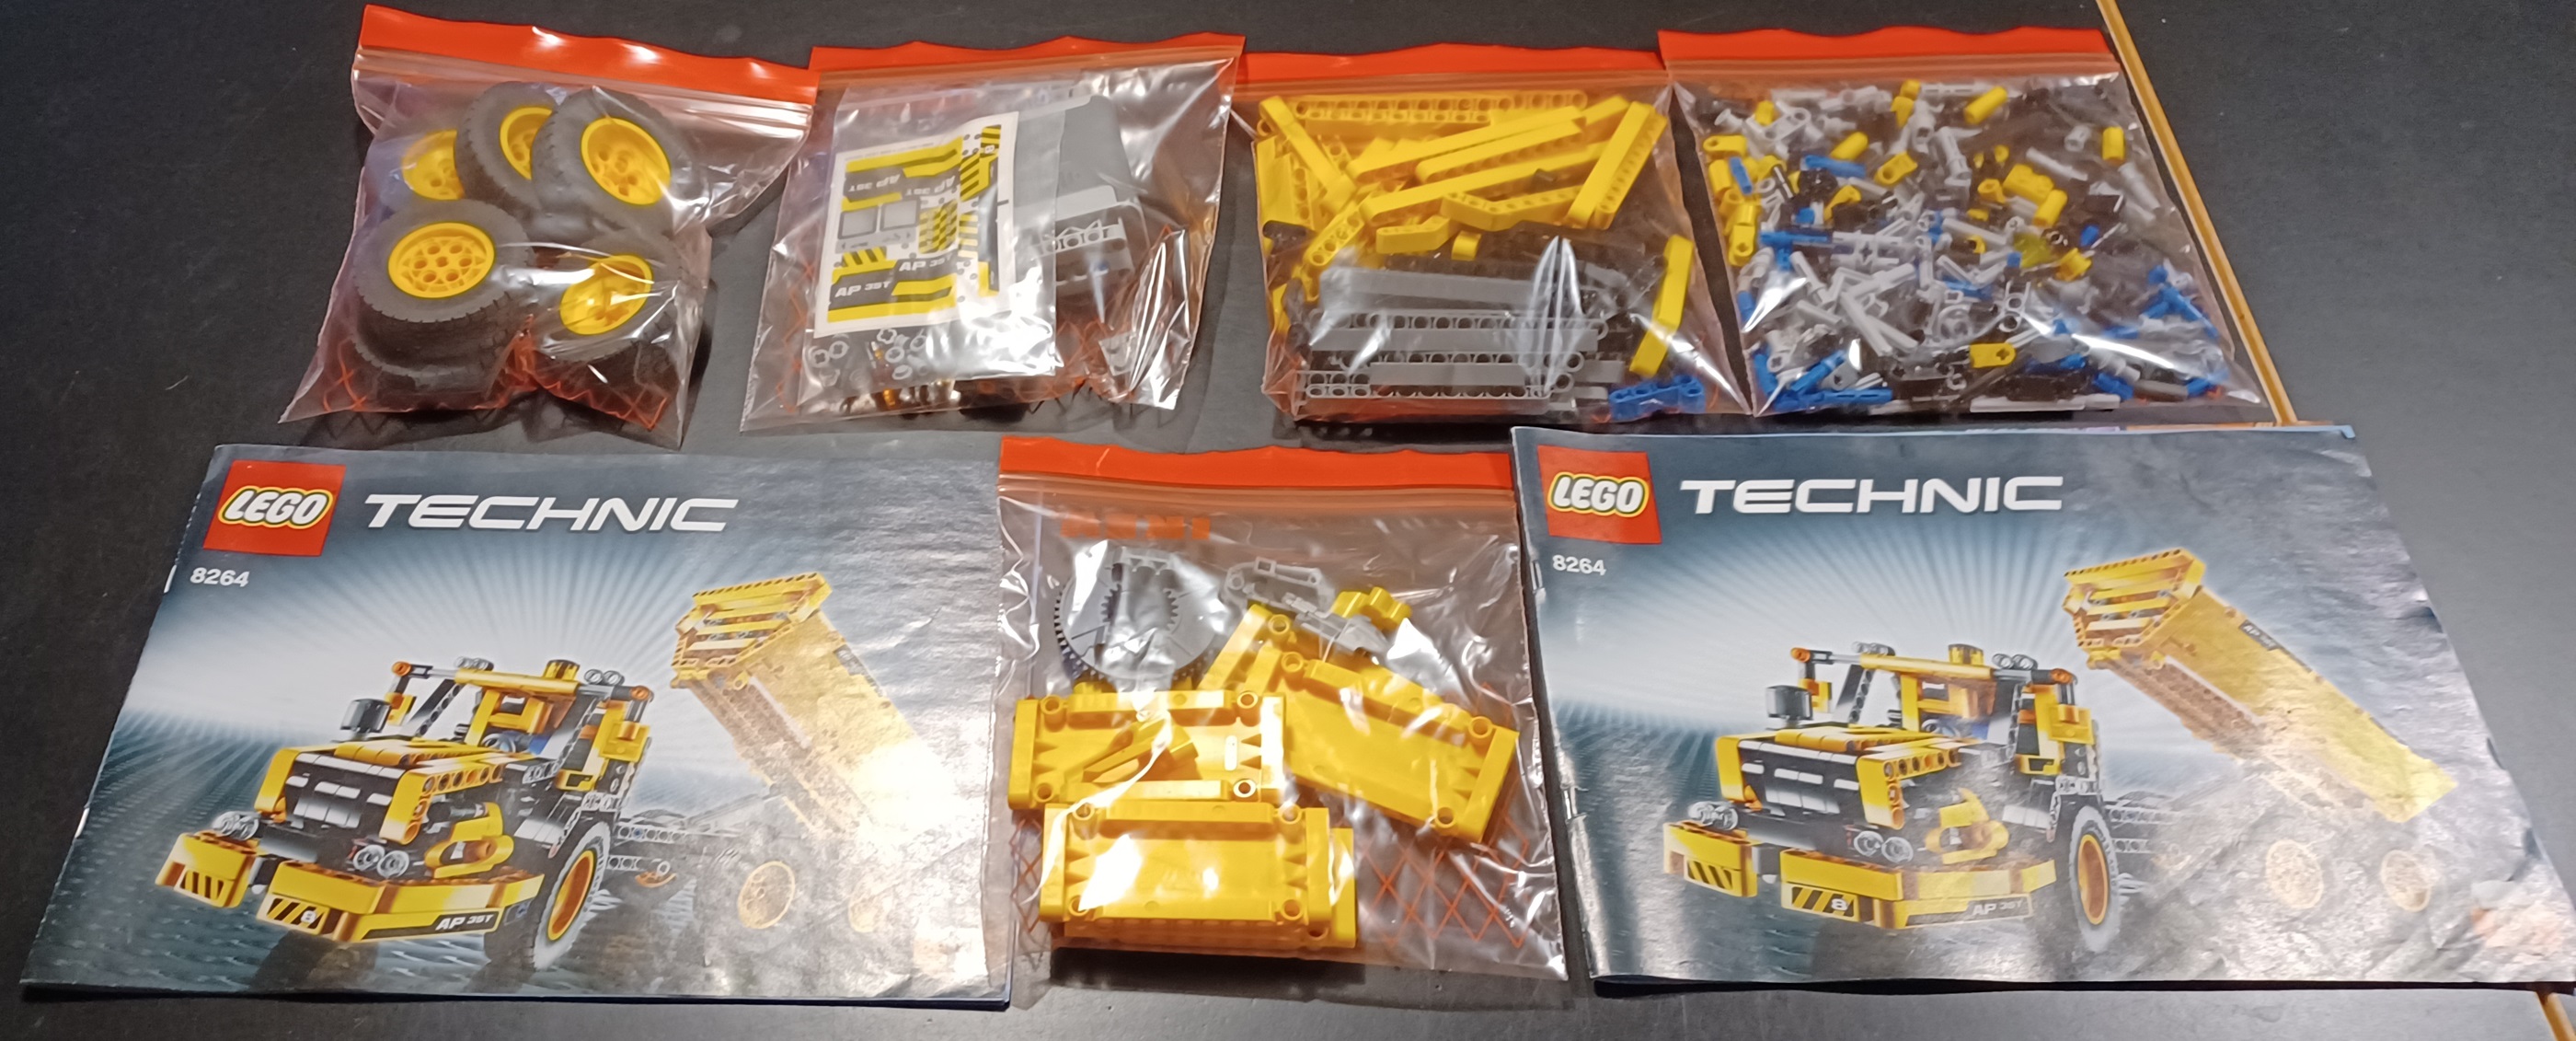 0010 Lego technic 8264